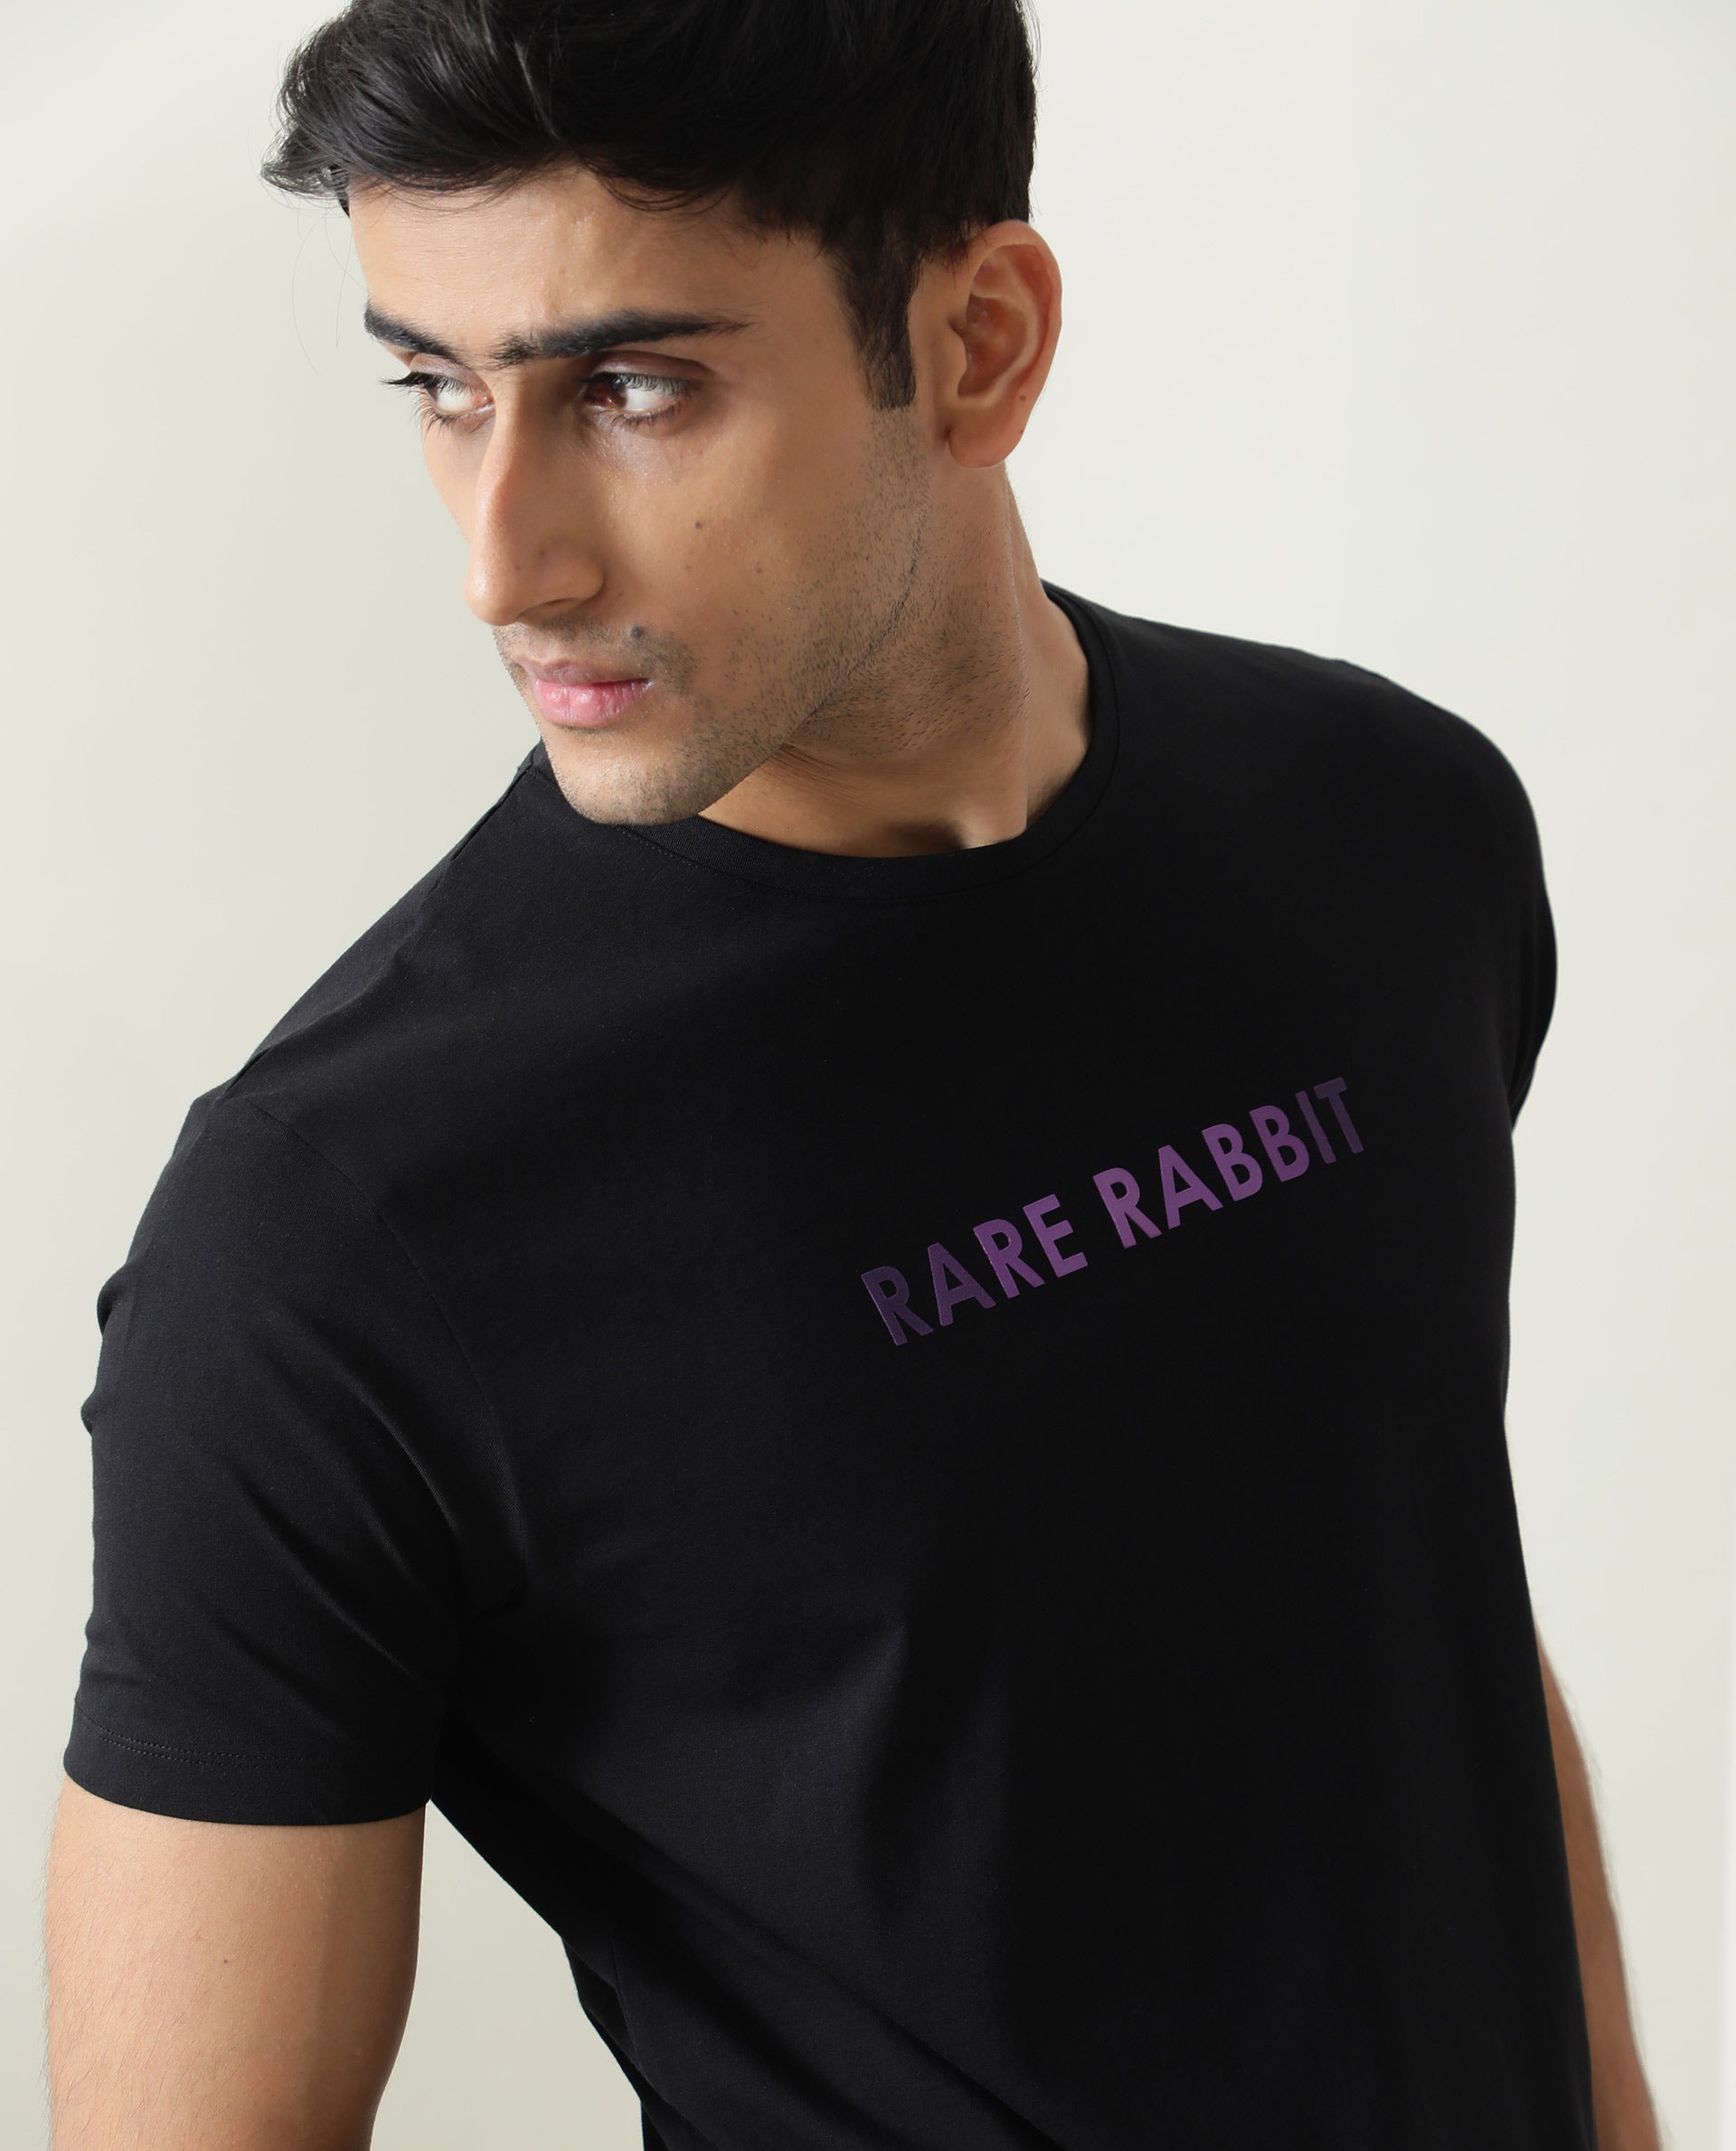 rare rabbit t shirts price